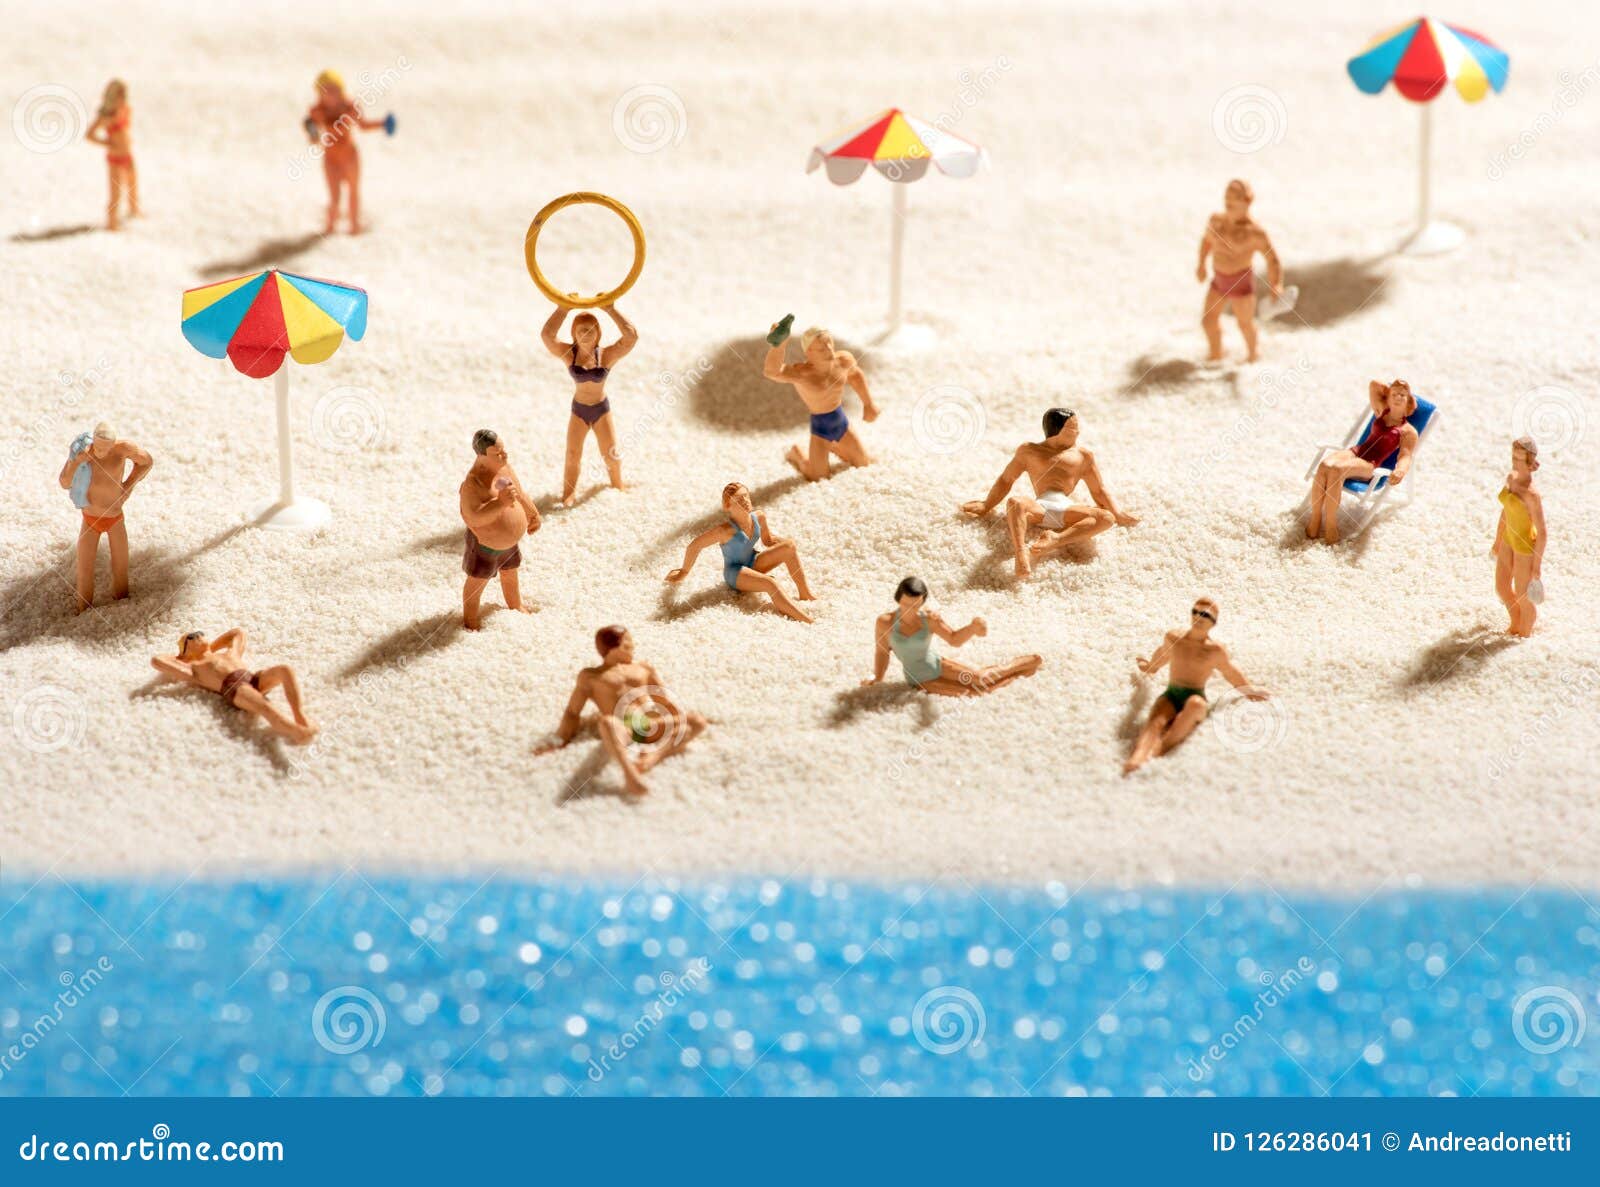 little miniature people sunbathing on a beach